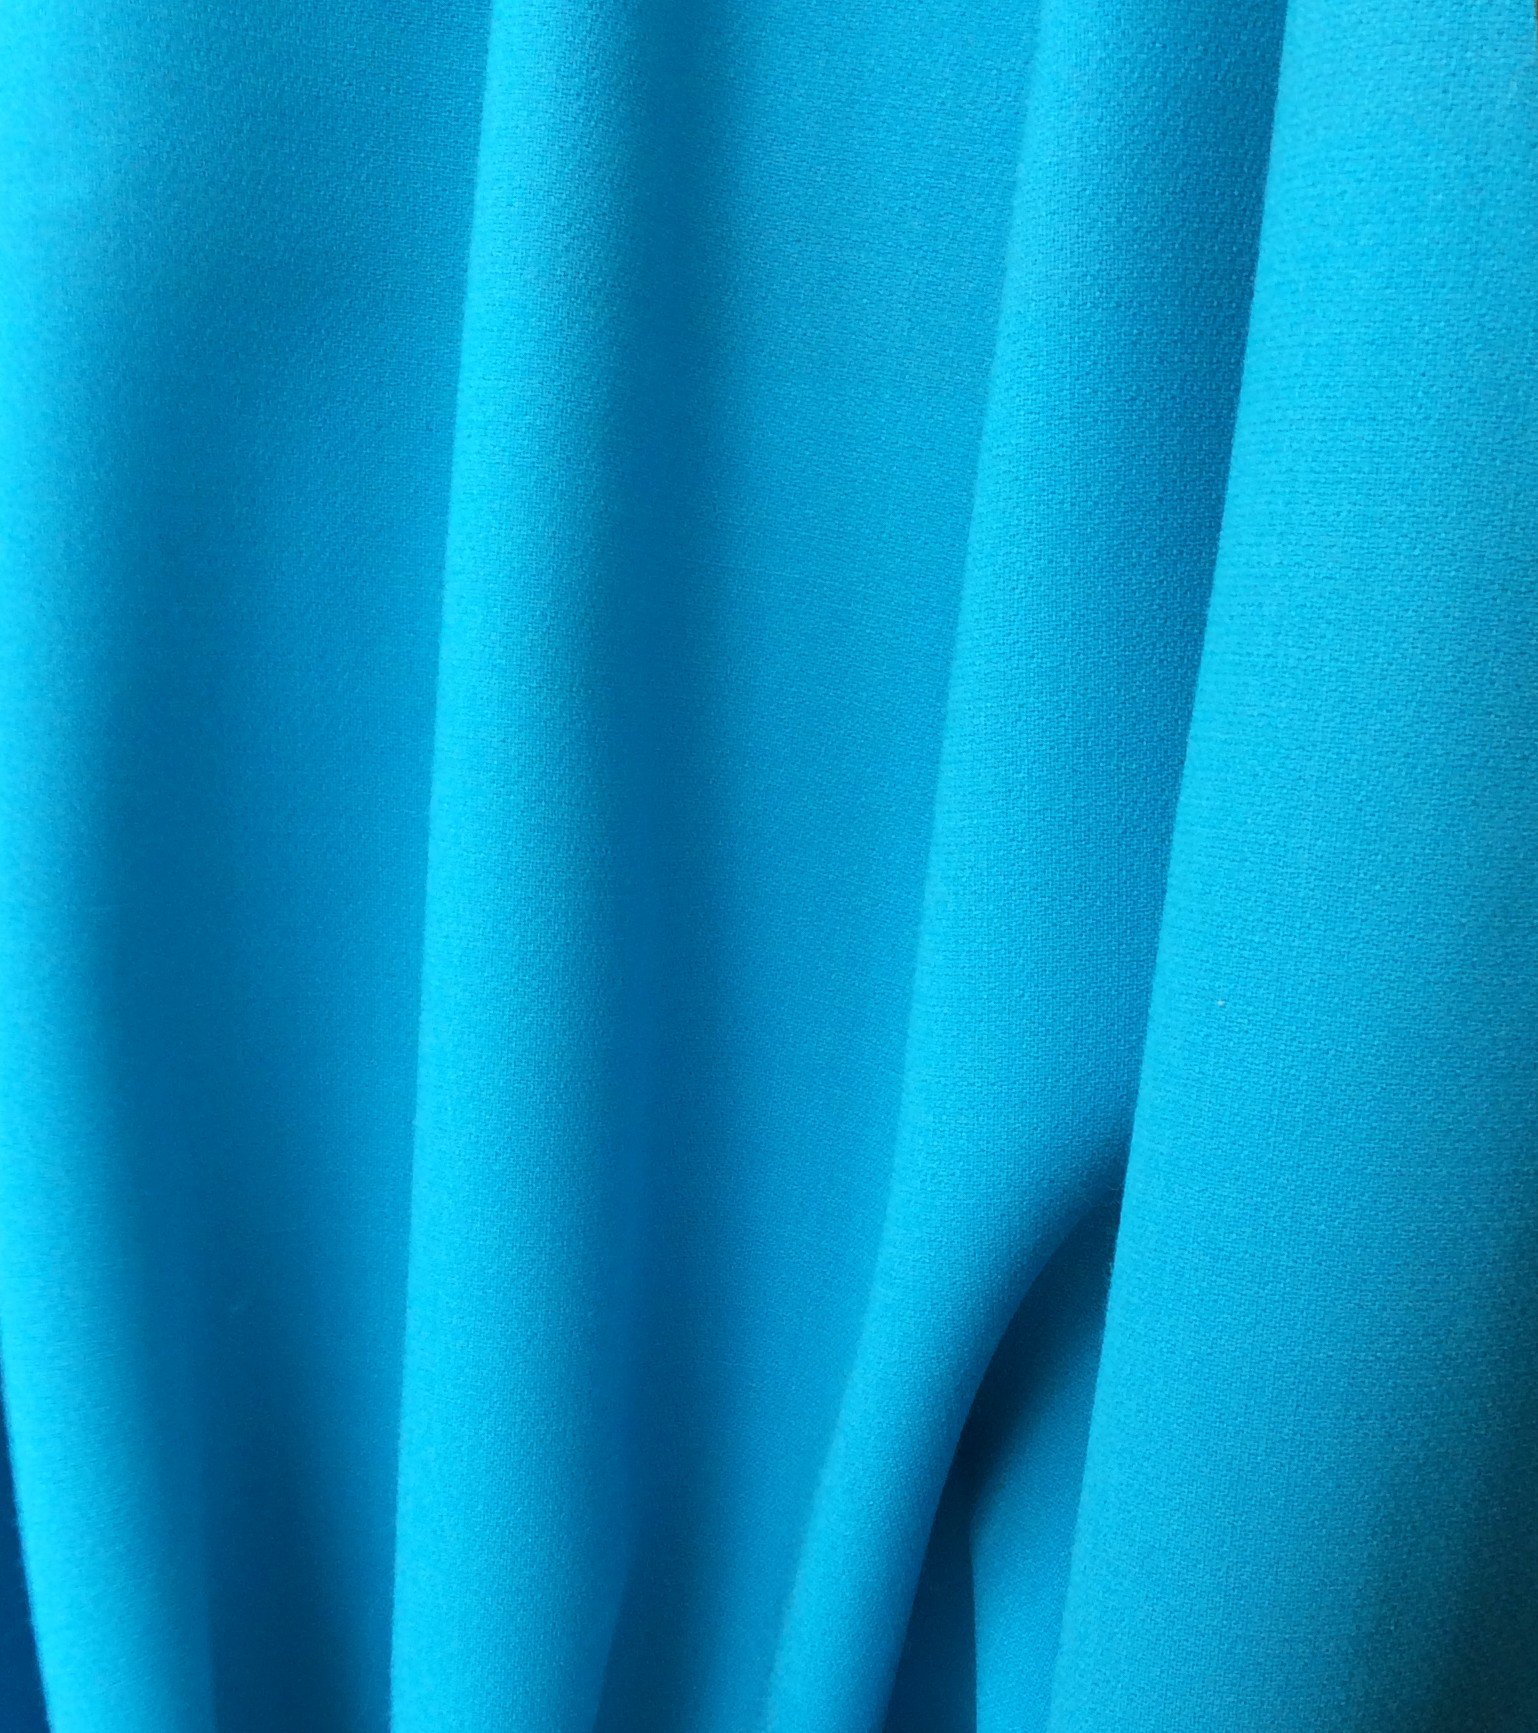 tissu bleu turquoise